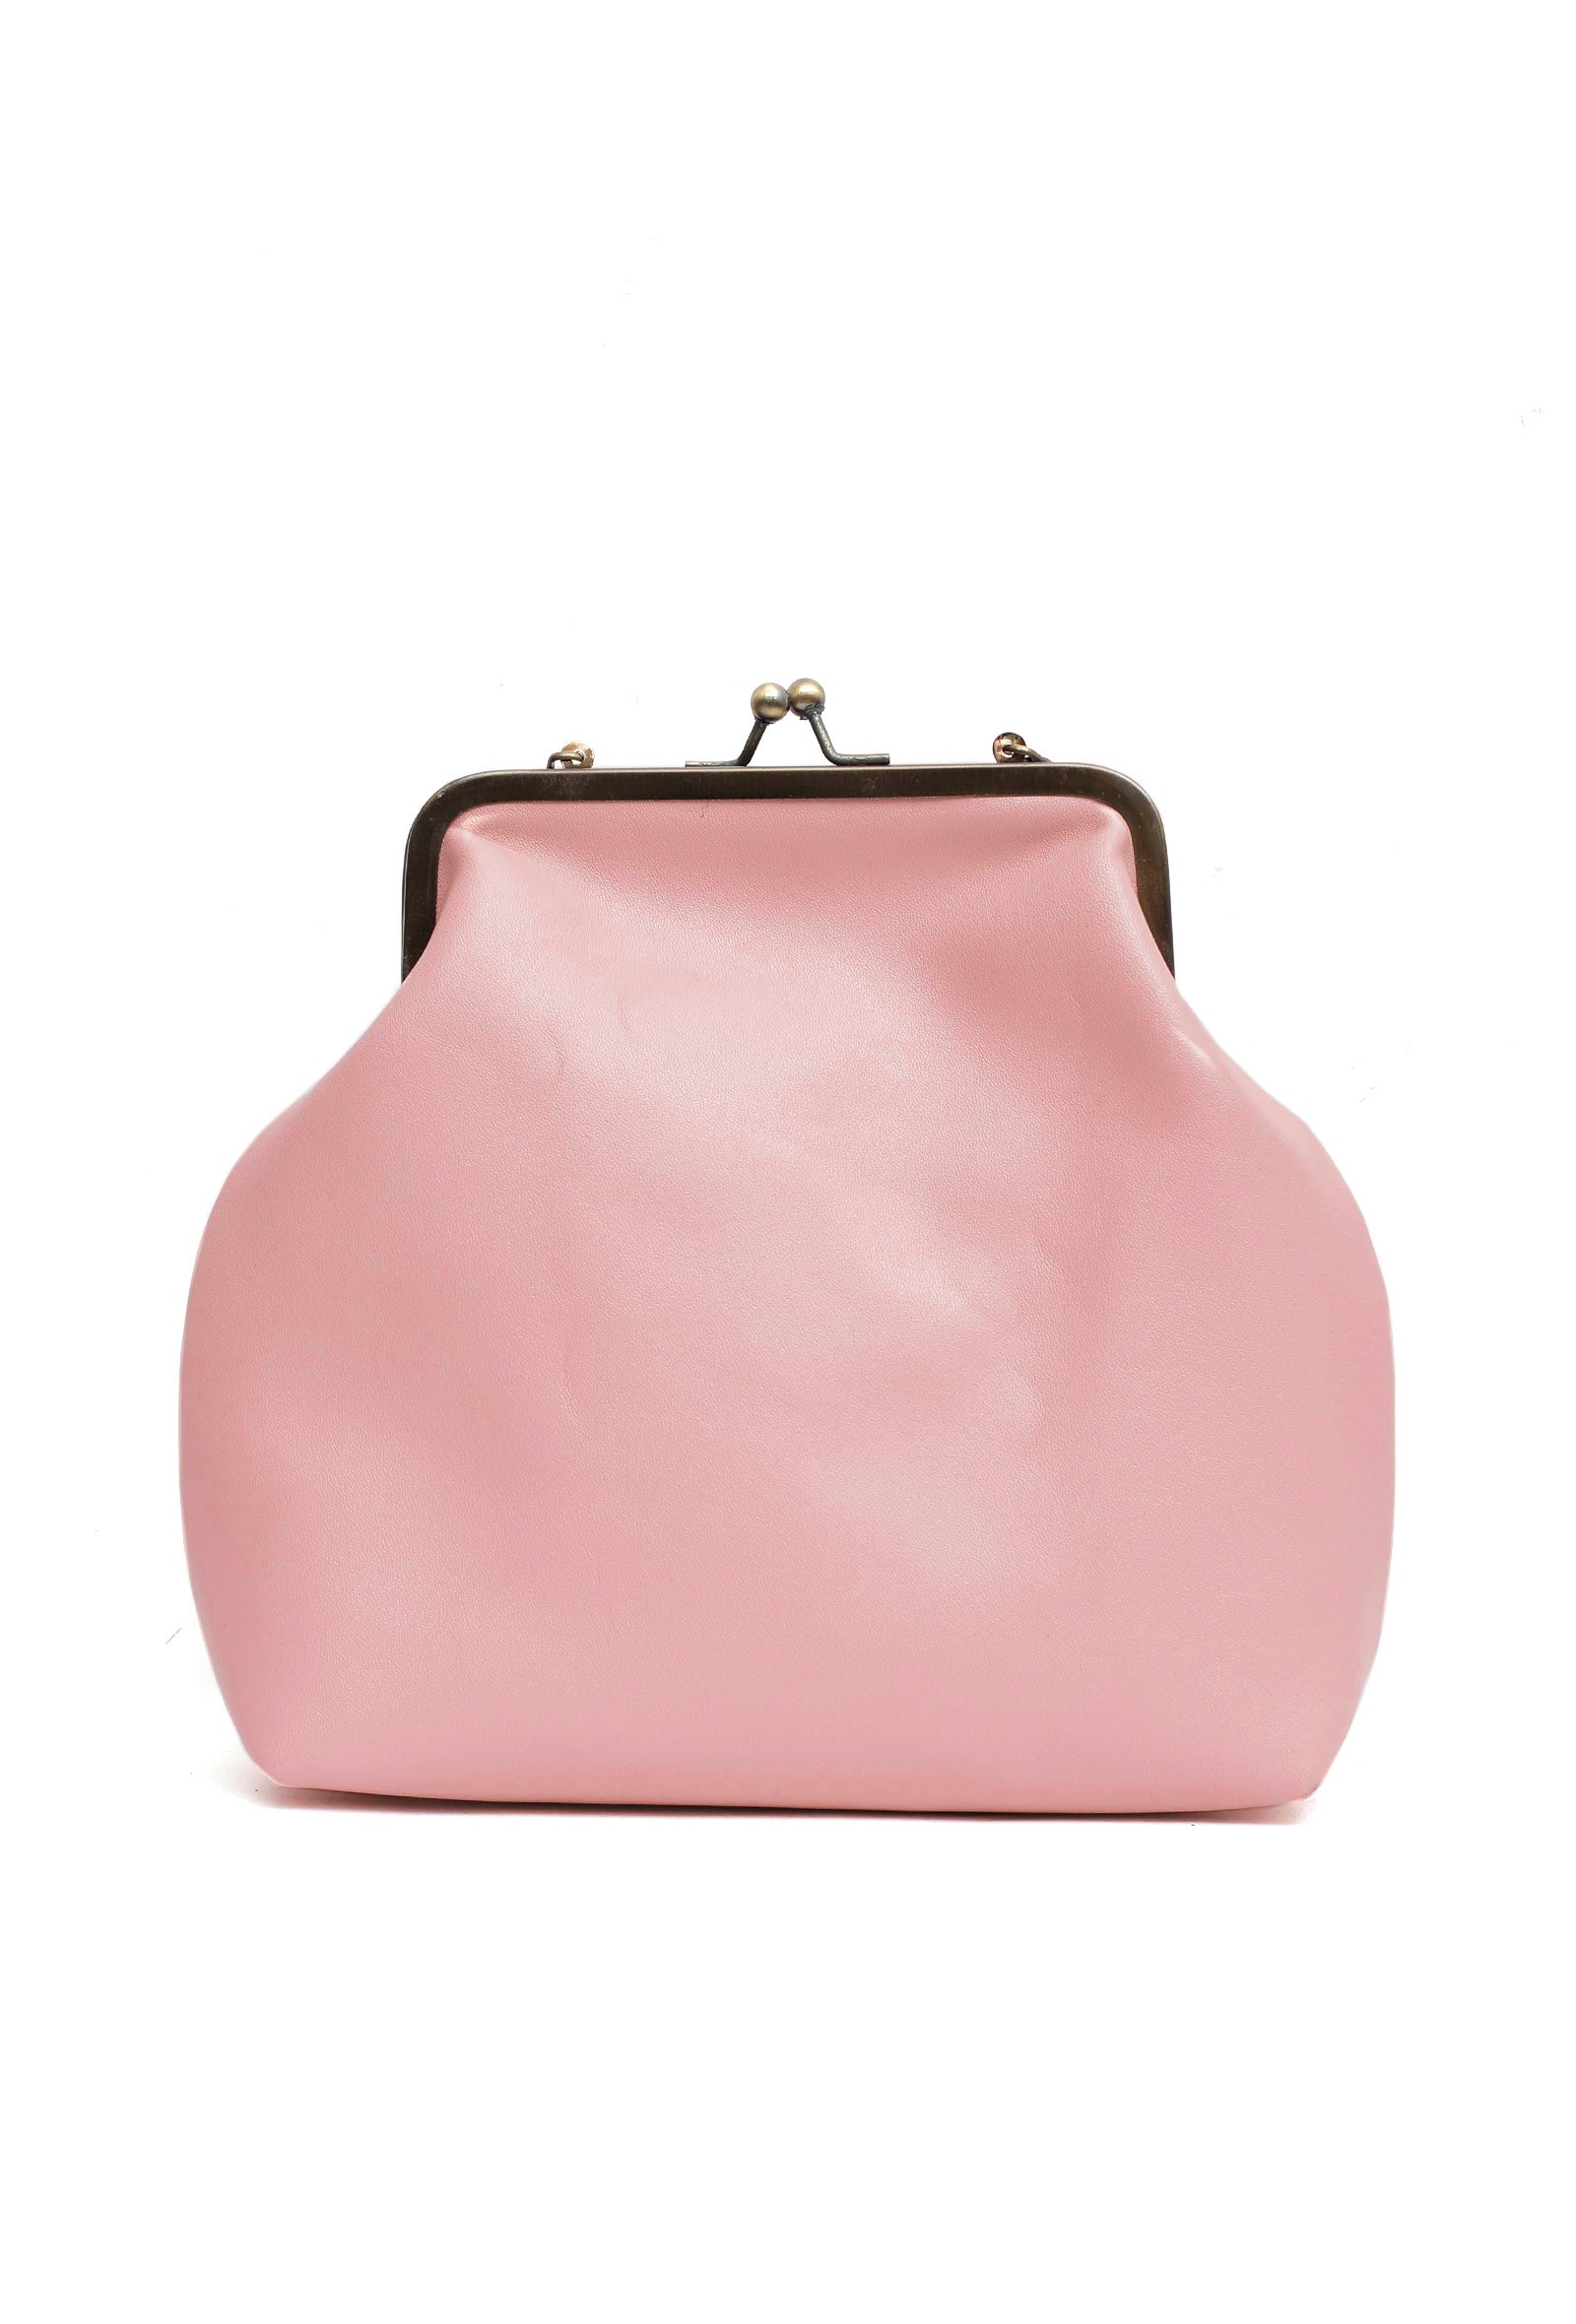 Solid Pink Clutch Bag